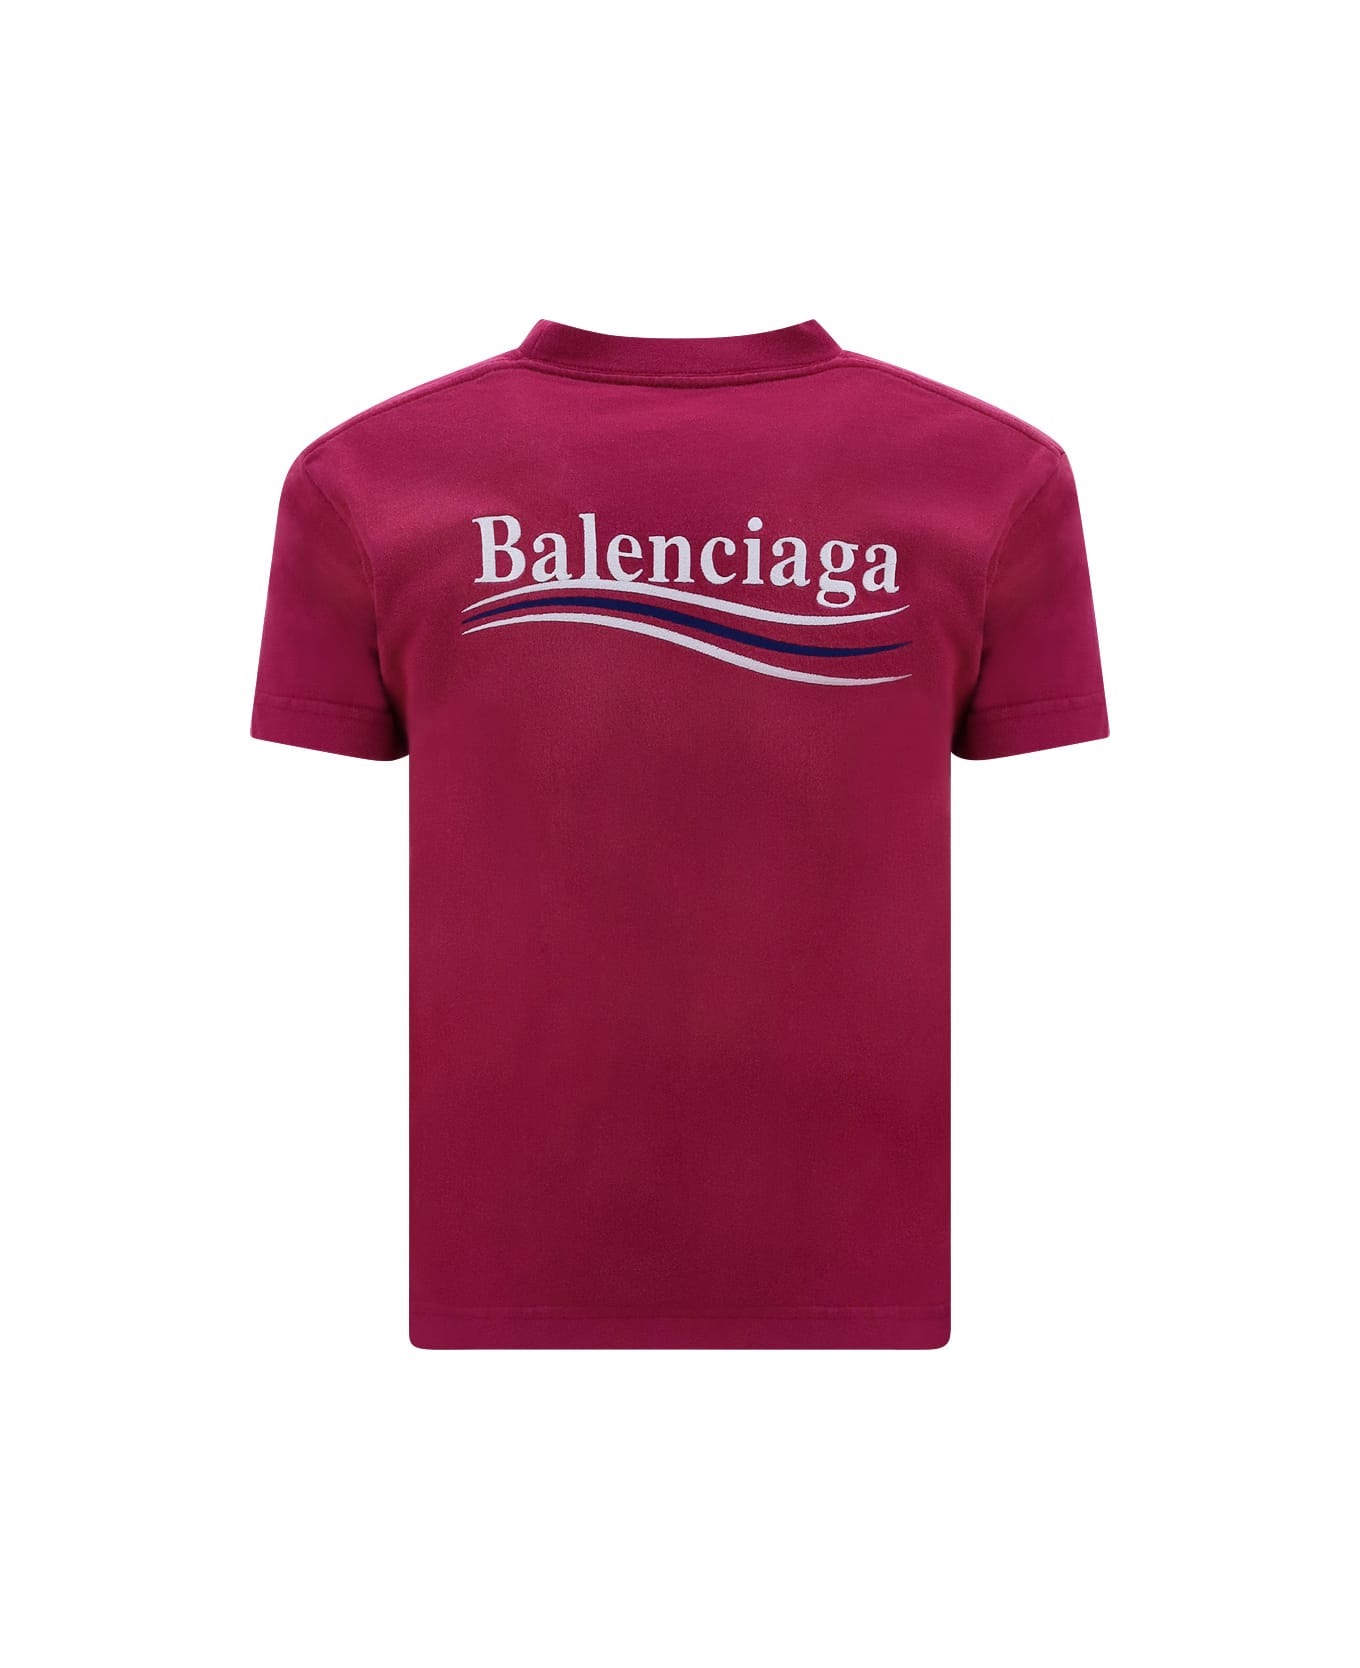 Balenciaga T-shirt - Dark Fuchsia/wt/blu